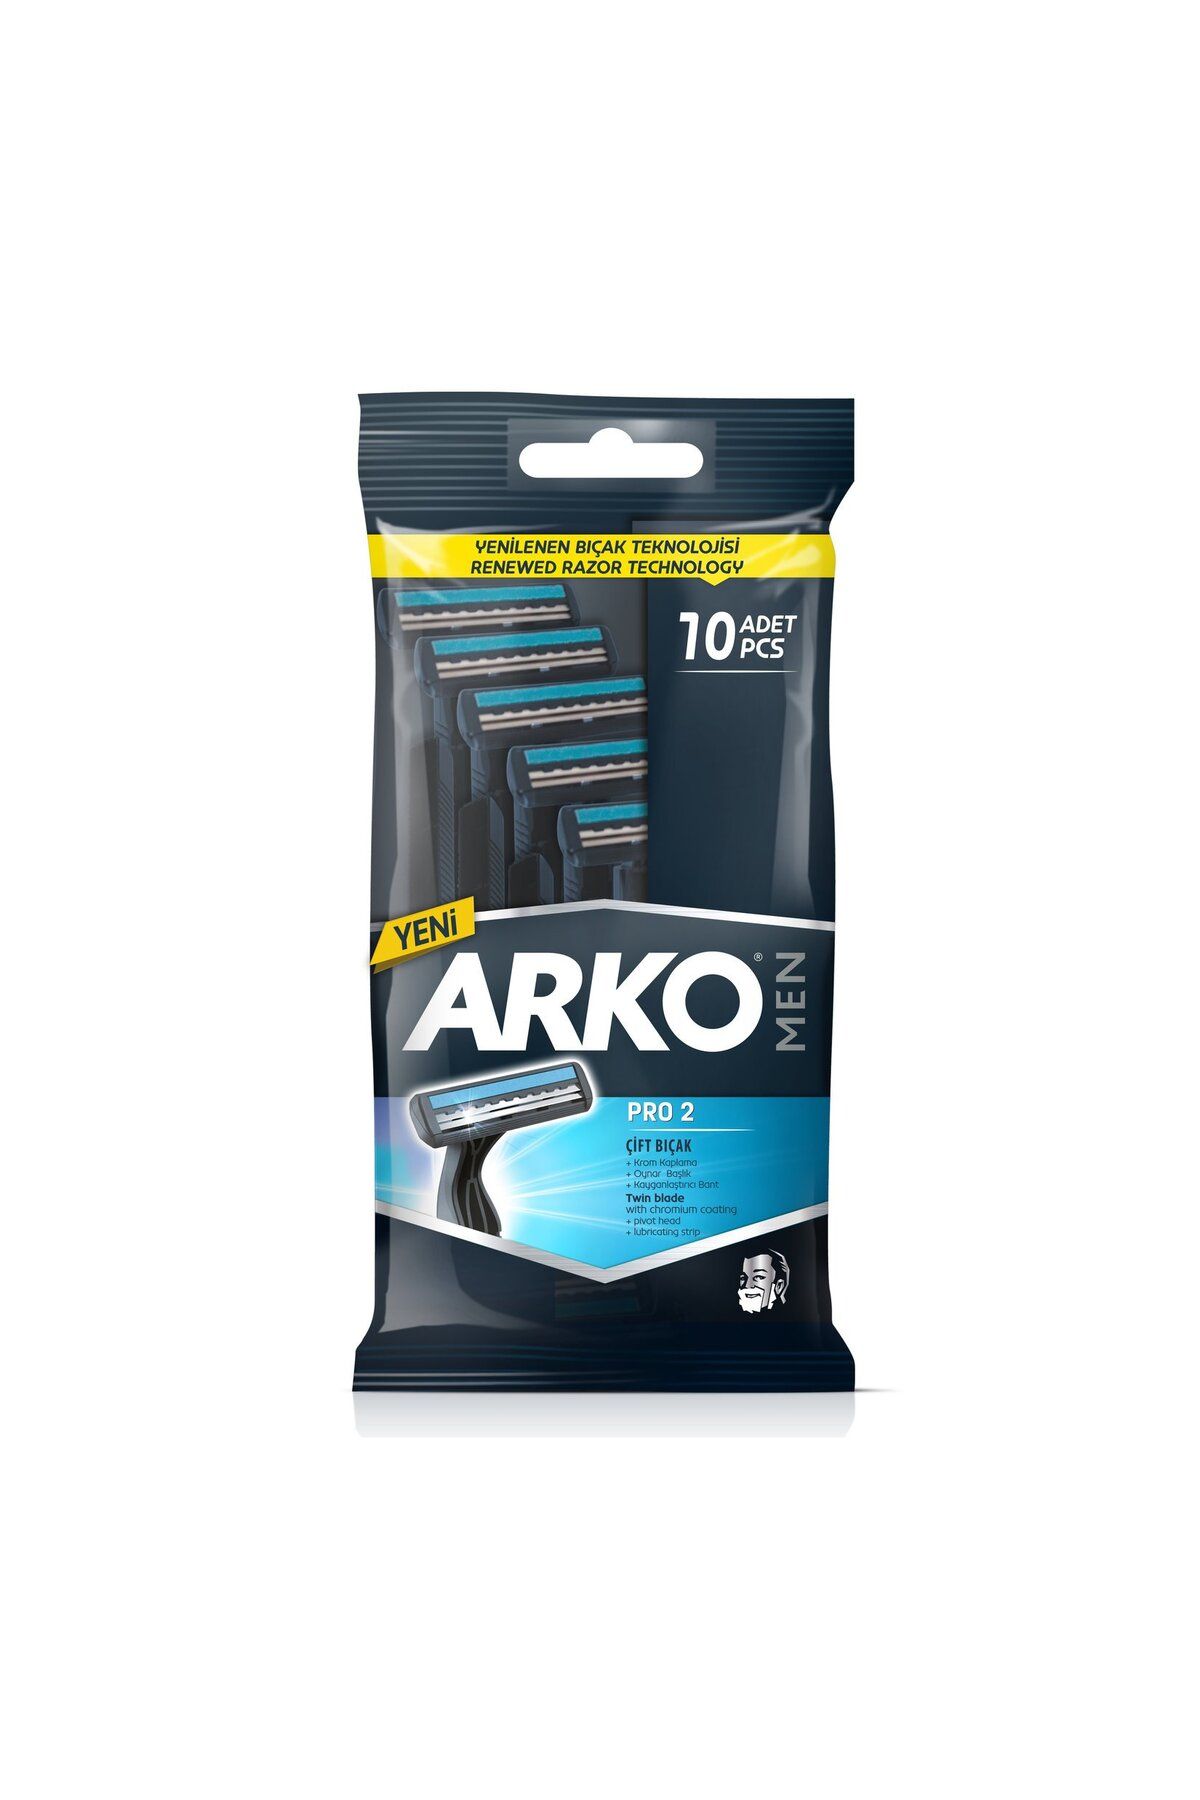 Arko Men Tıraş Bıçağı Pro 2 10'lu